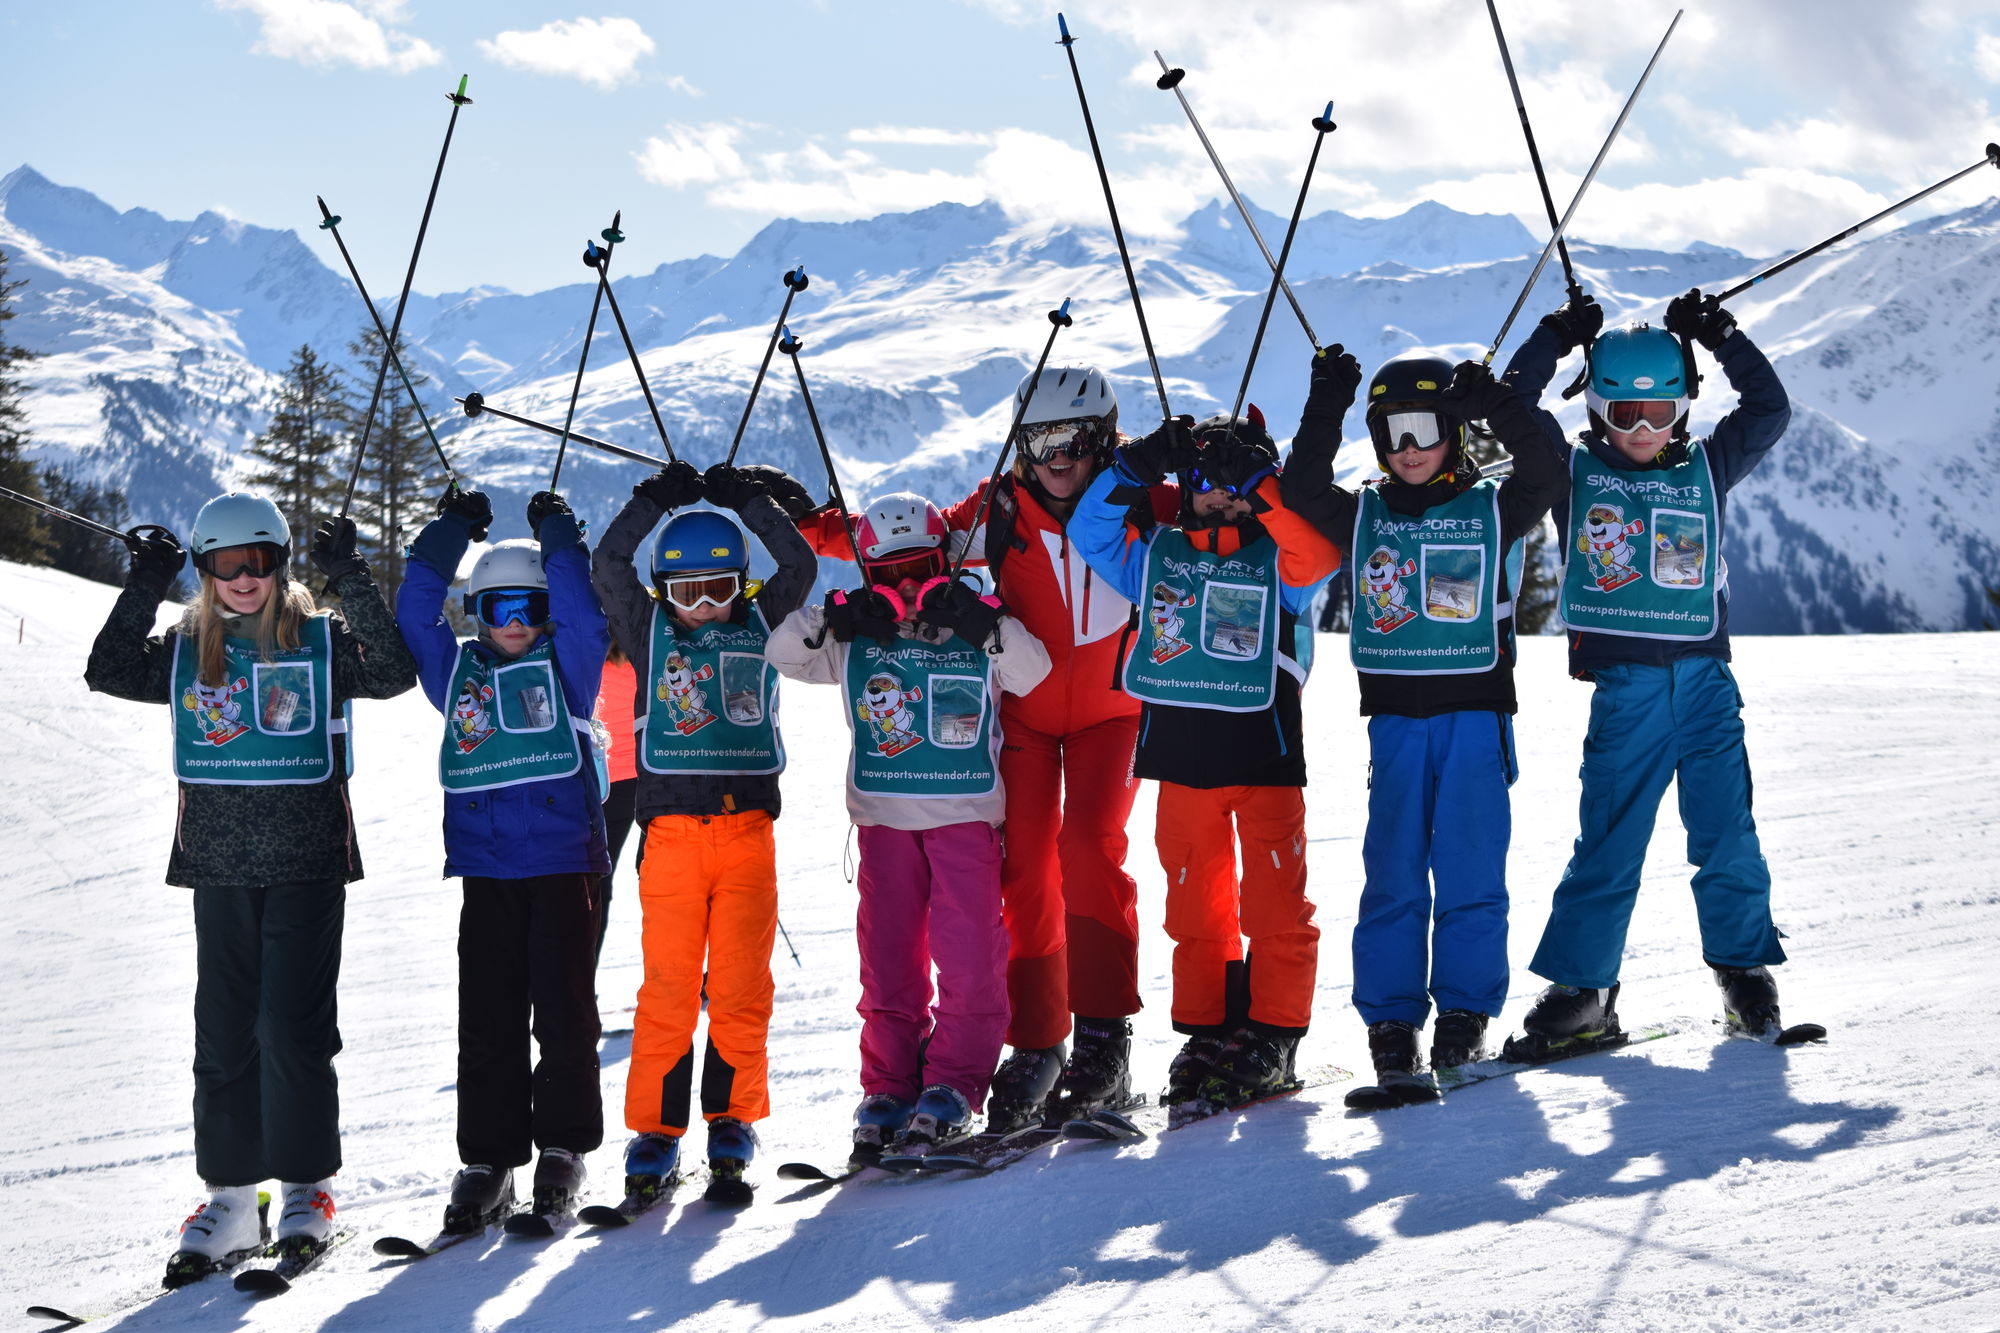 Ski school & Ski rental Snowsports Westendorf in Austria, Europe | Snowboarding,Skiing - Rated 1